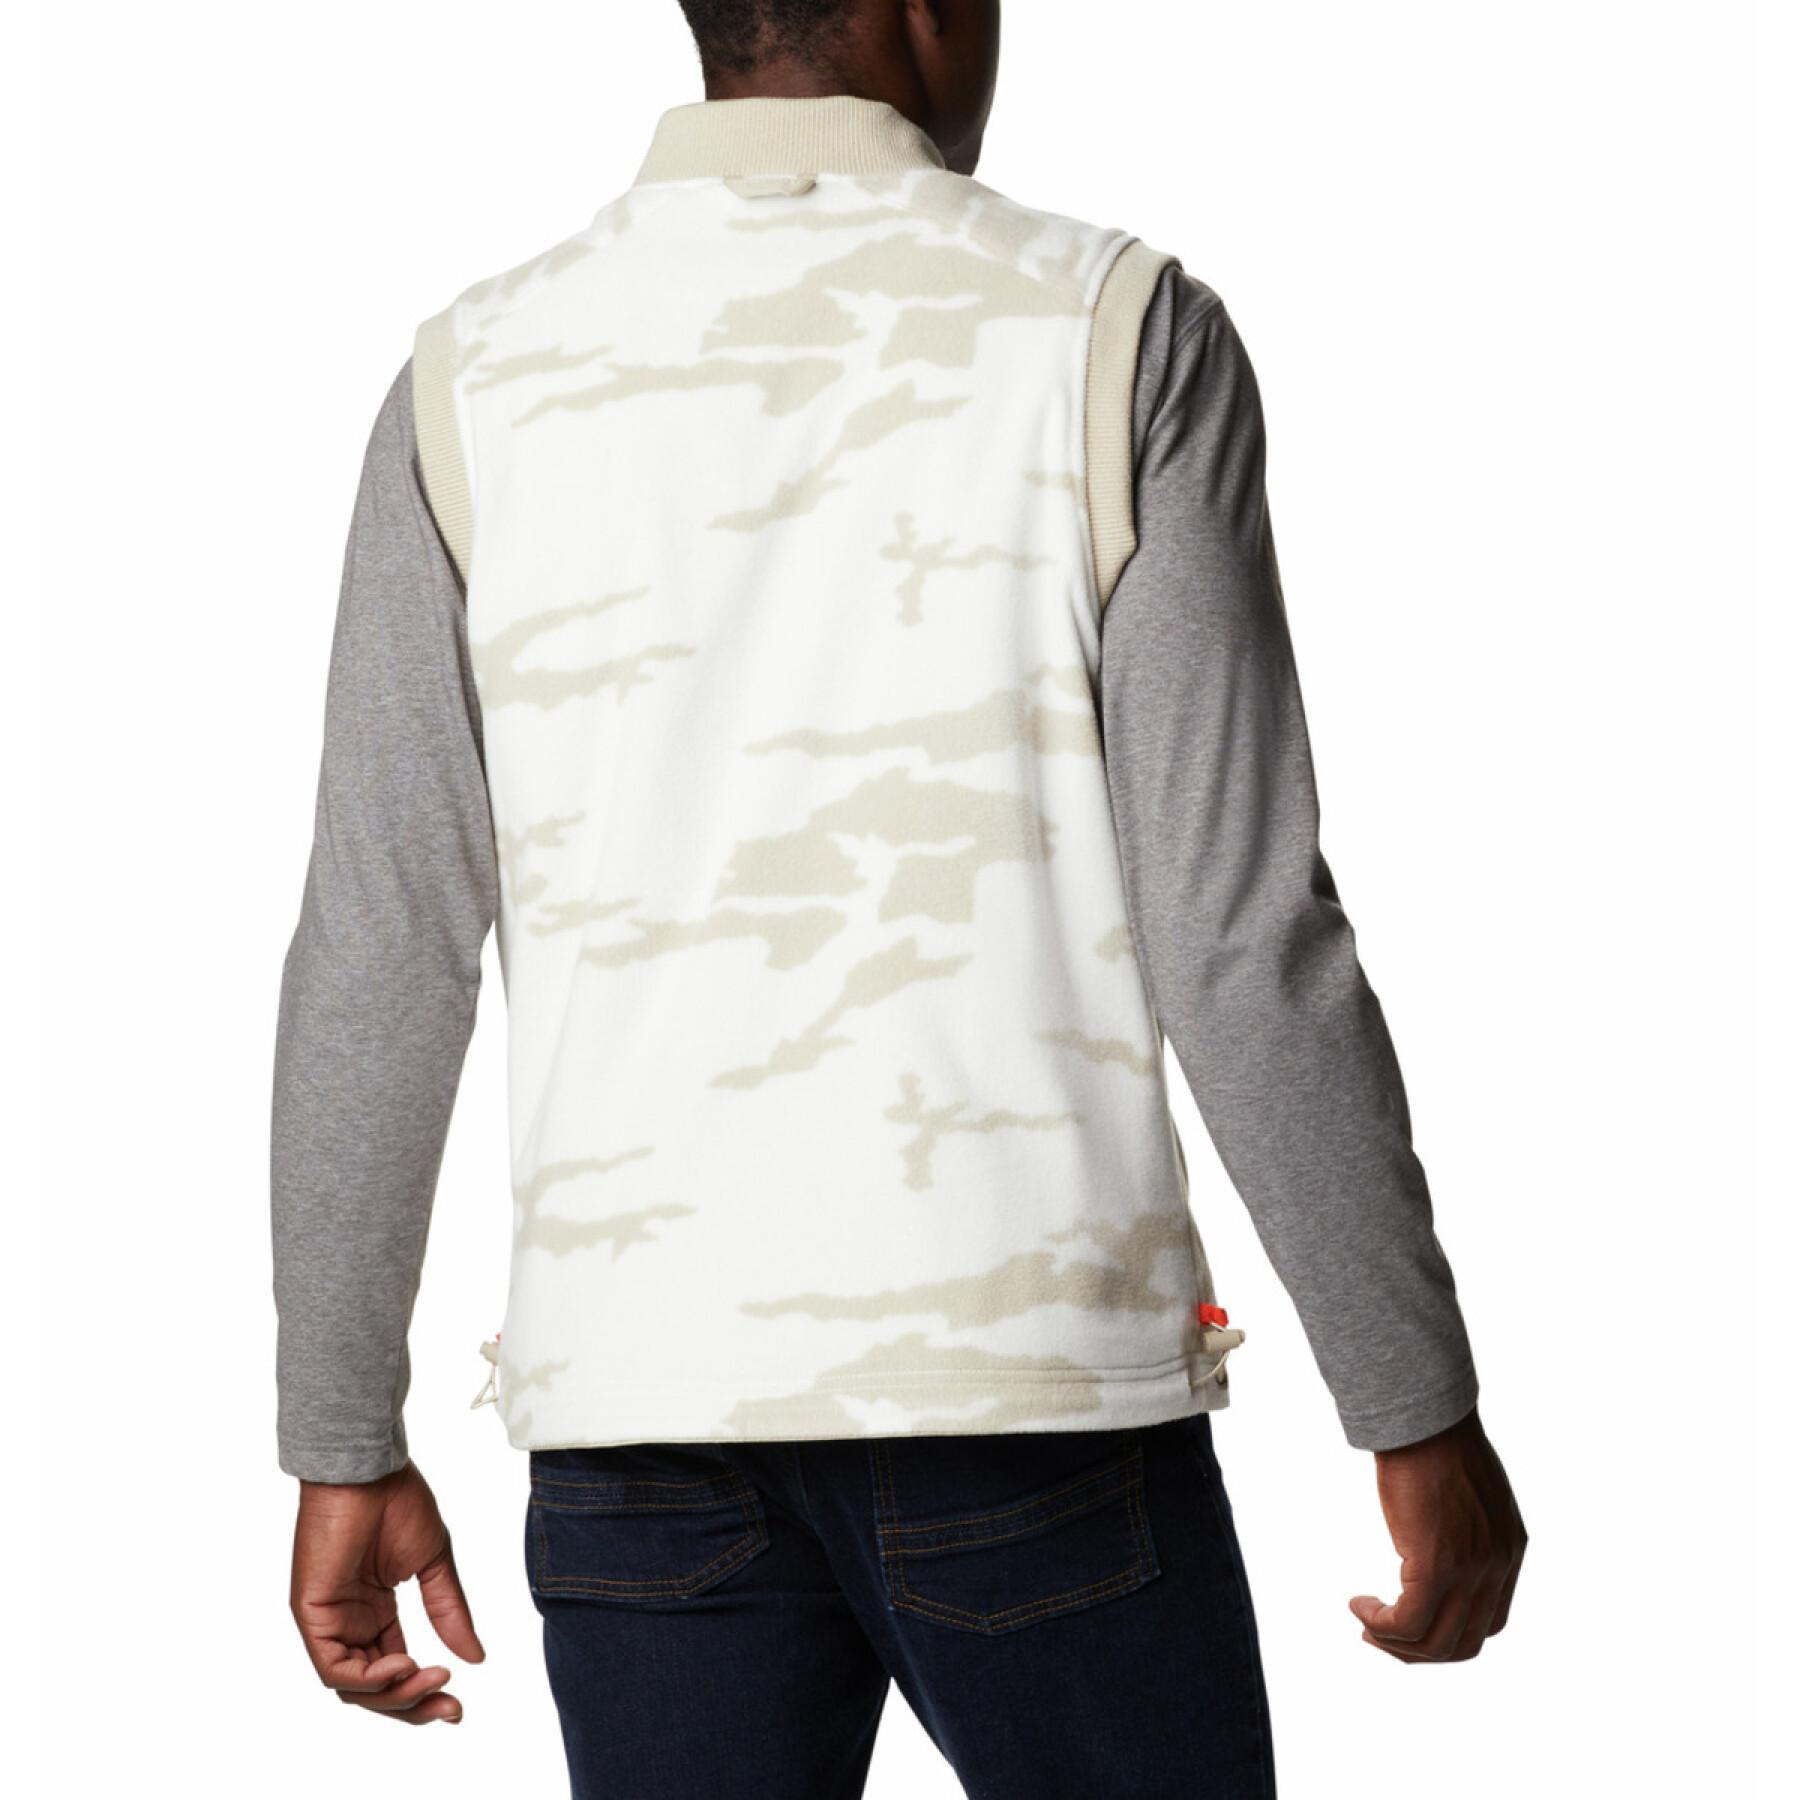 Sleeveless jacket Columbia Field ROC Reversible